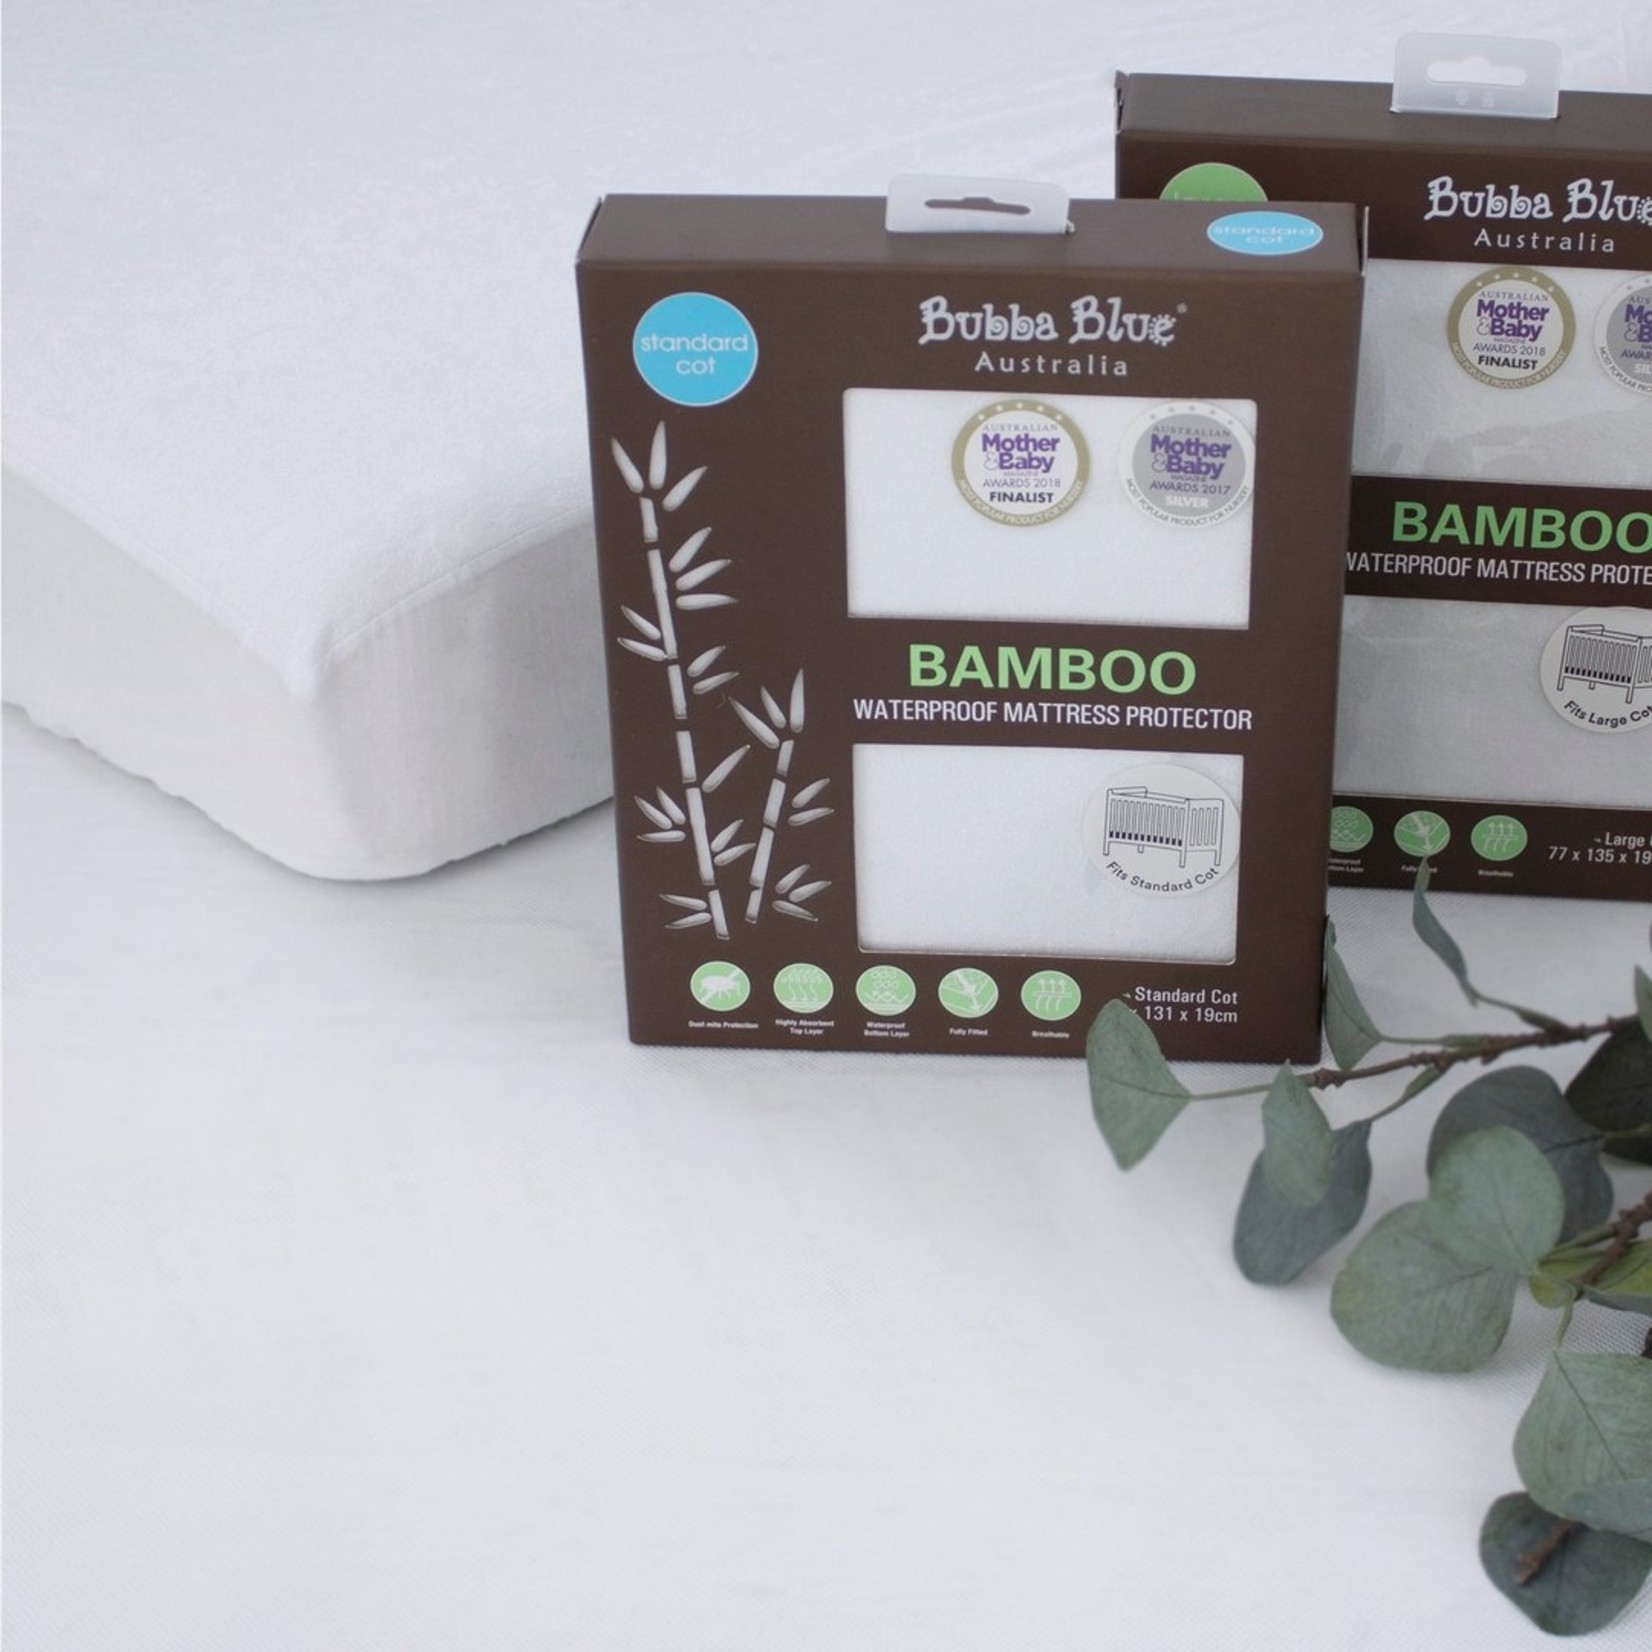 Bubba Blue Bamboo Mattress Protector-Standard Cot